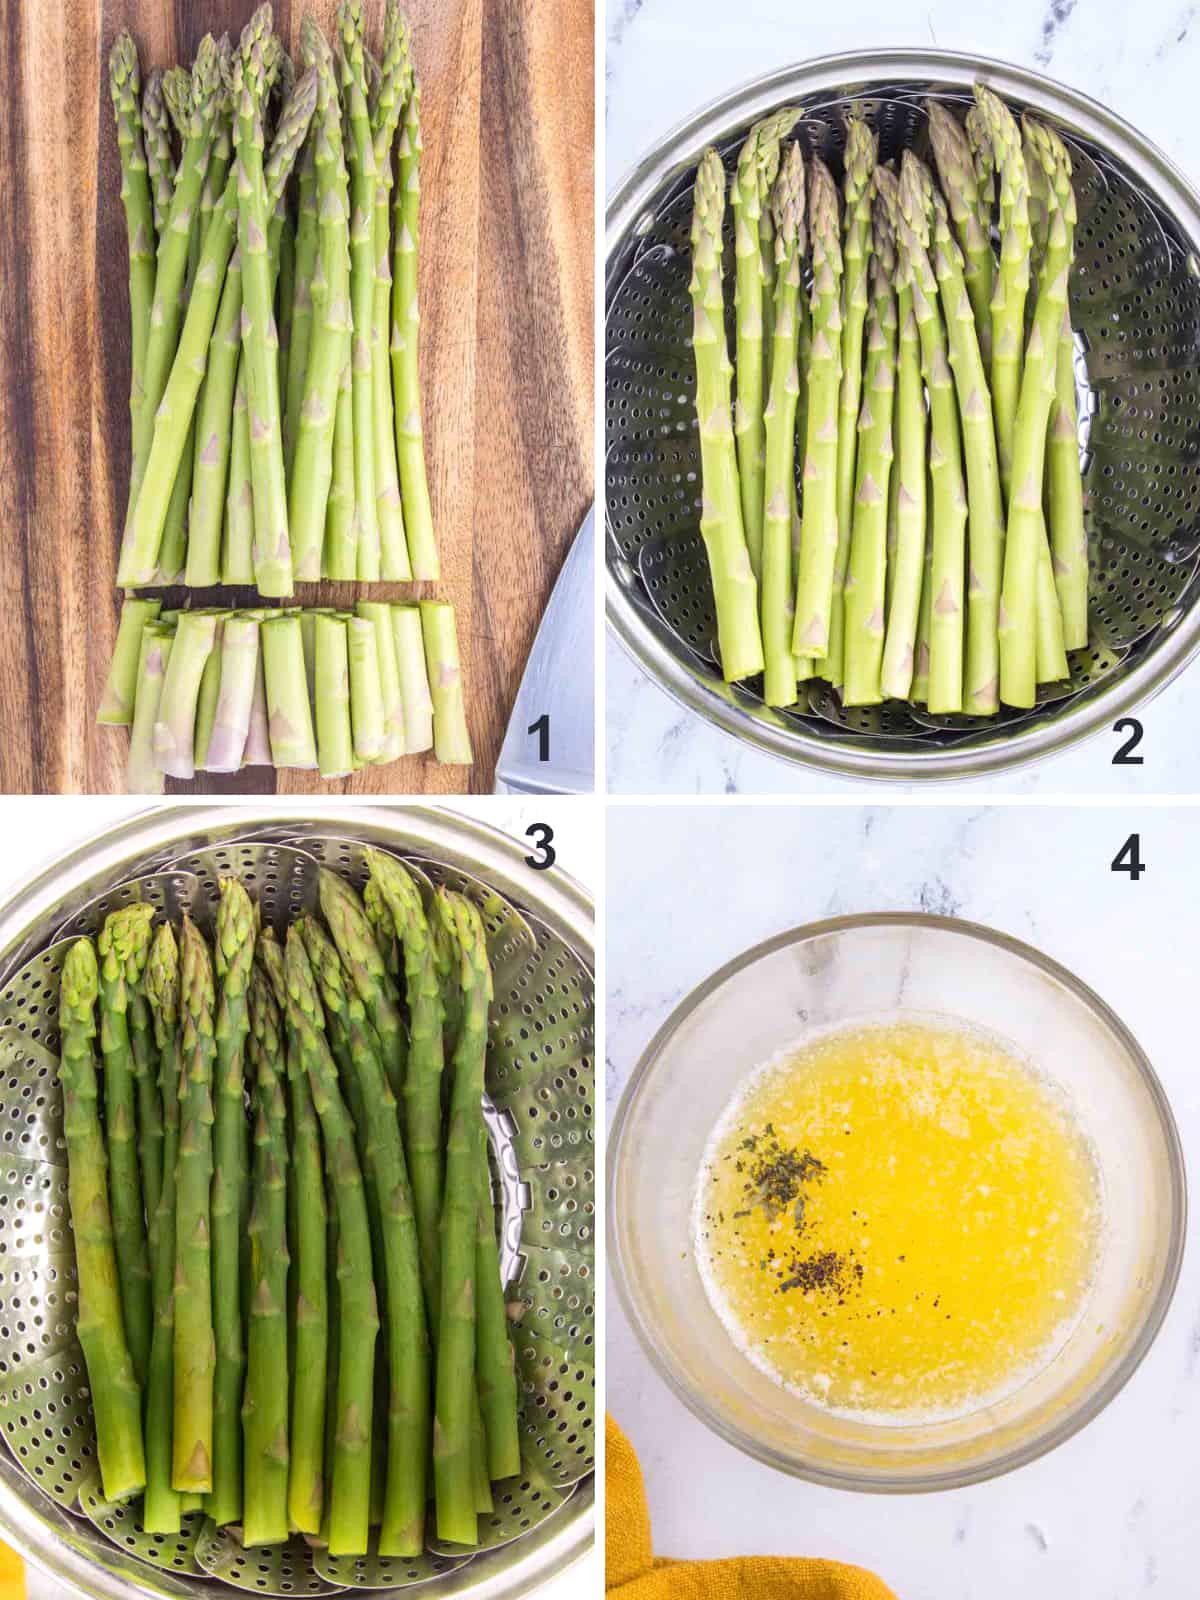 asparagus with bottoms trimmed off, asparagus in steamer basket, seasoned melted butter